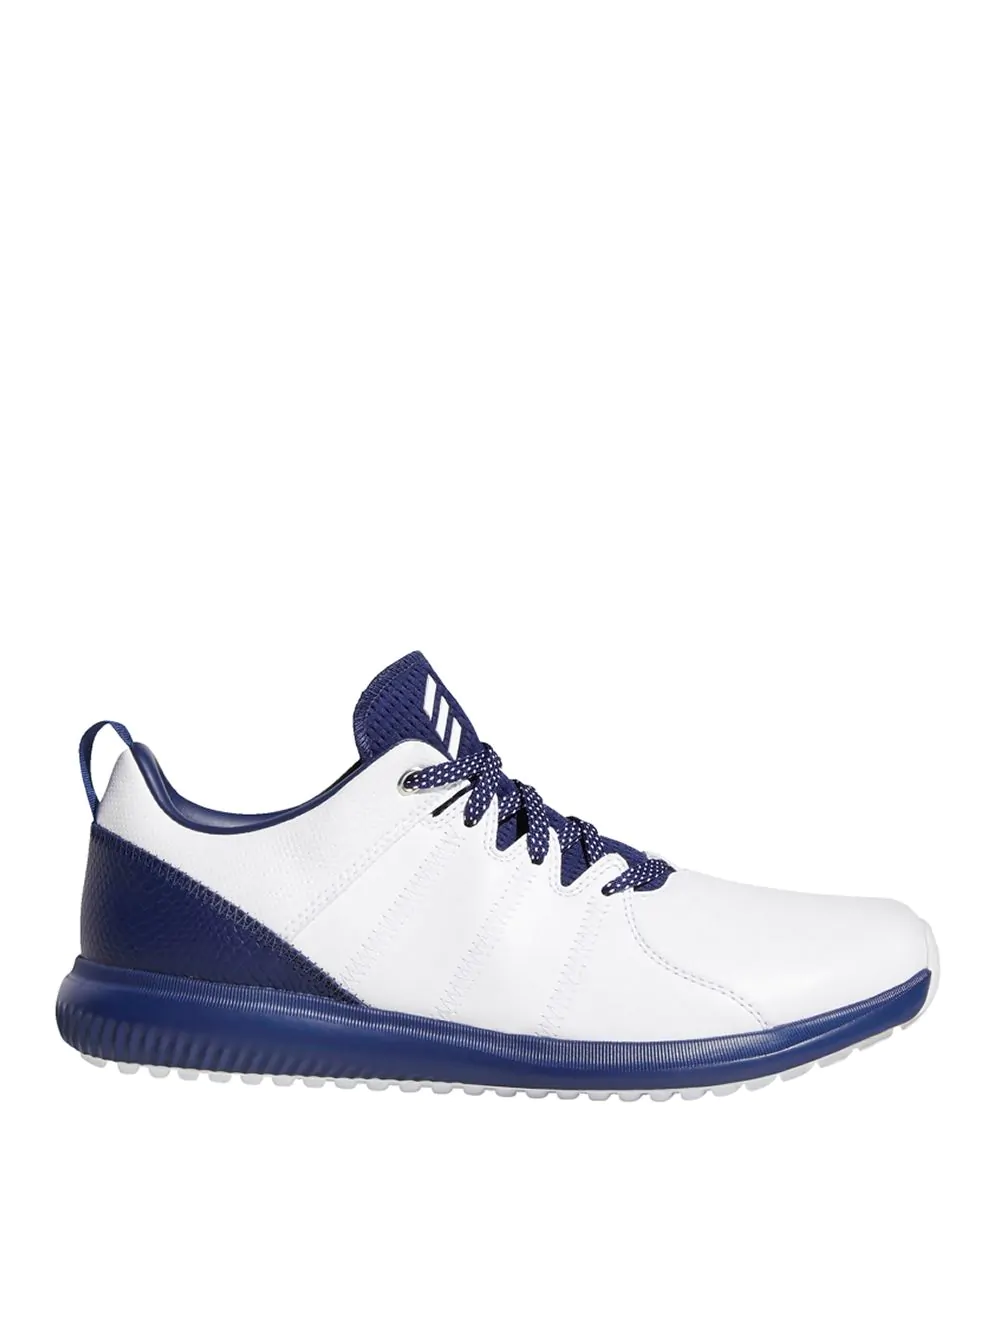 adidas PPF Golf Shoes - White/Dark Blue/Ash Green